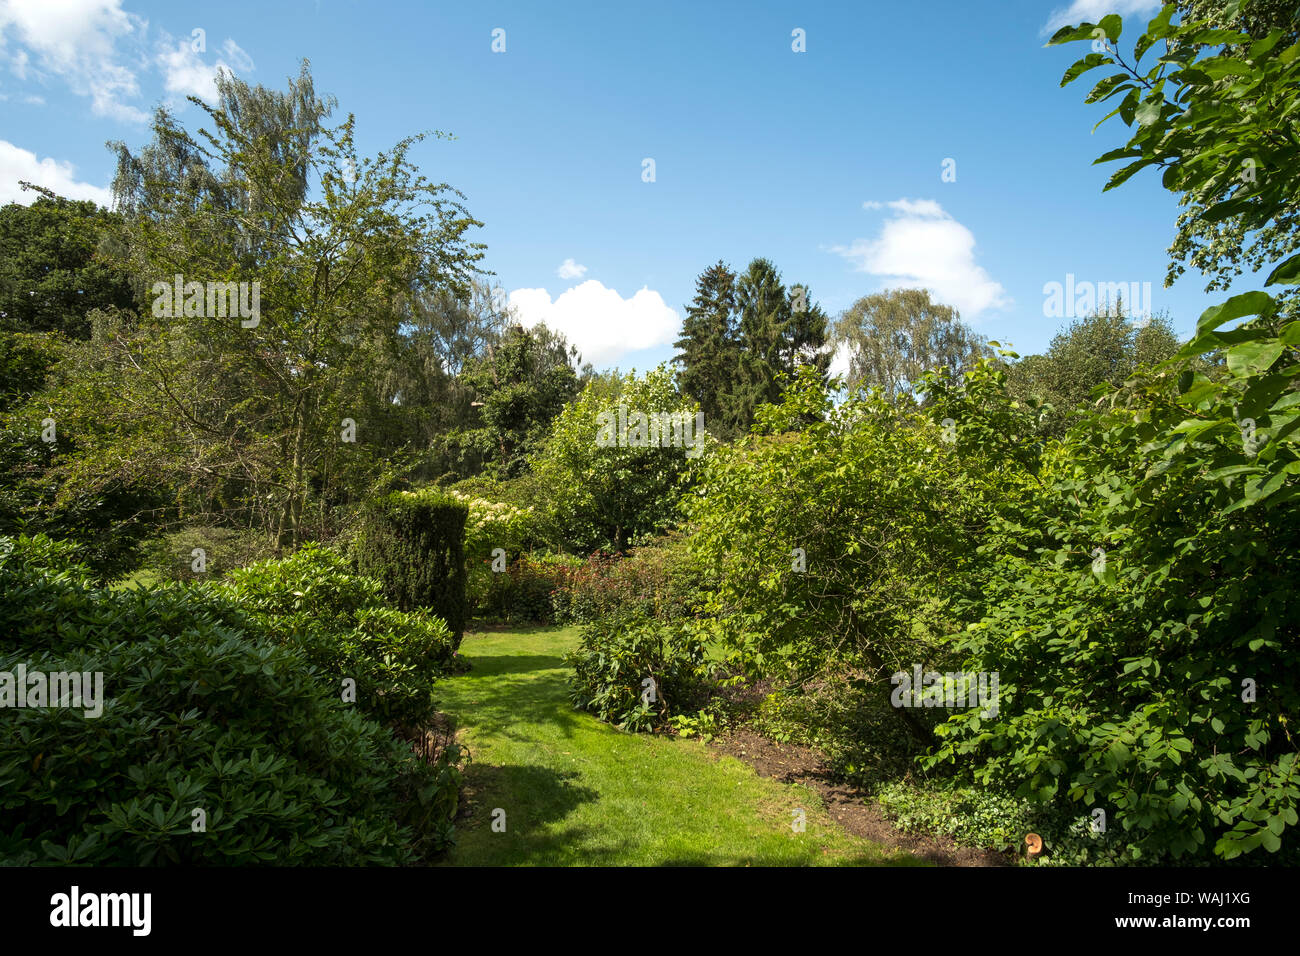 Summer garden yew bush background image Stock Photo